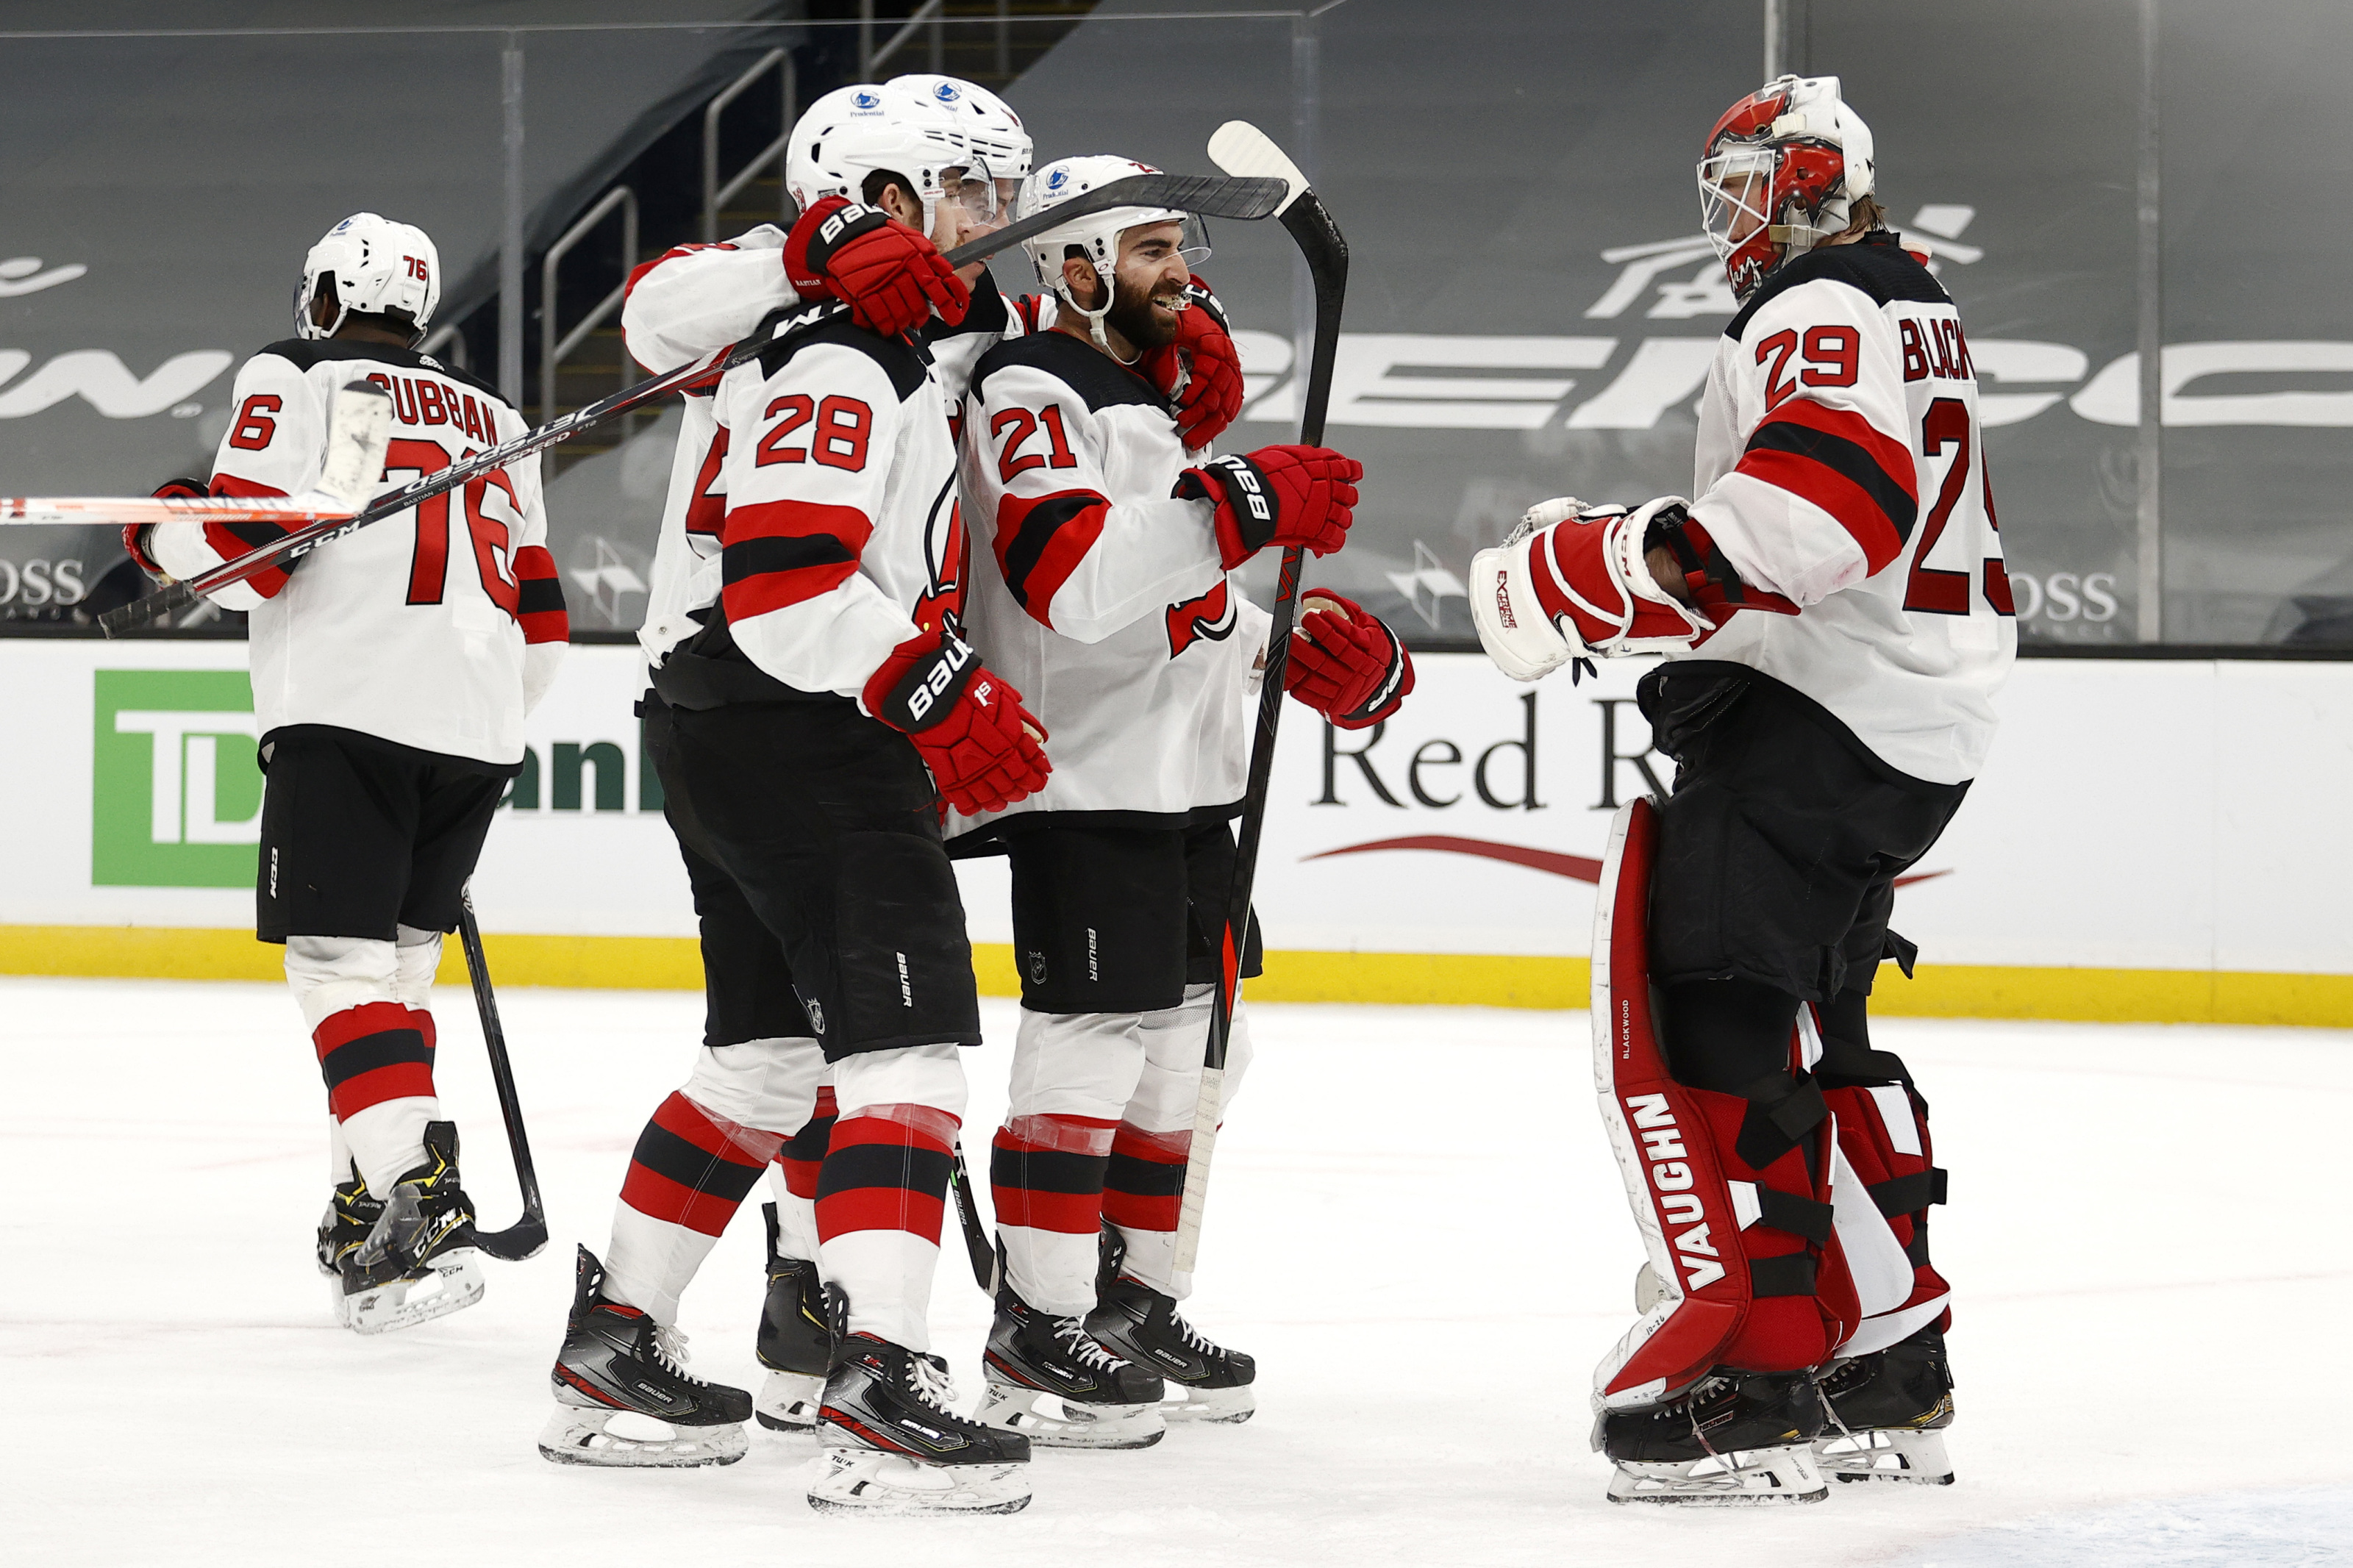 Devils visit Capitals after shutout win